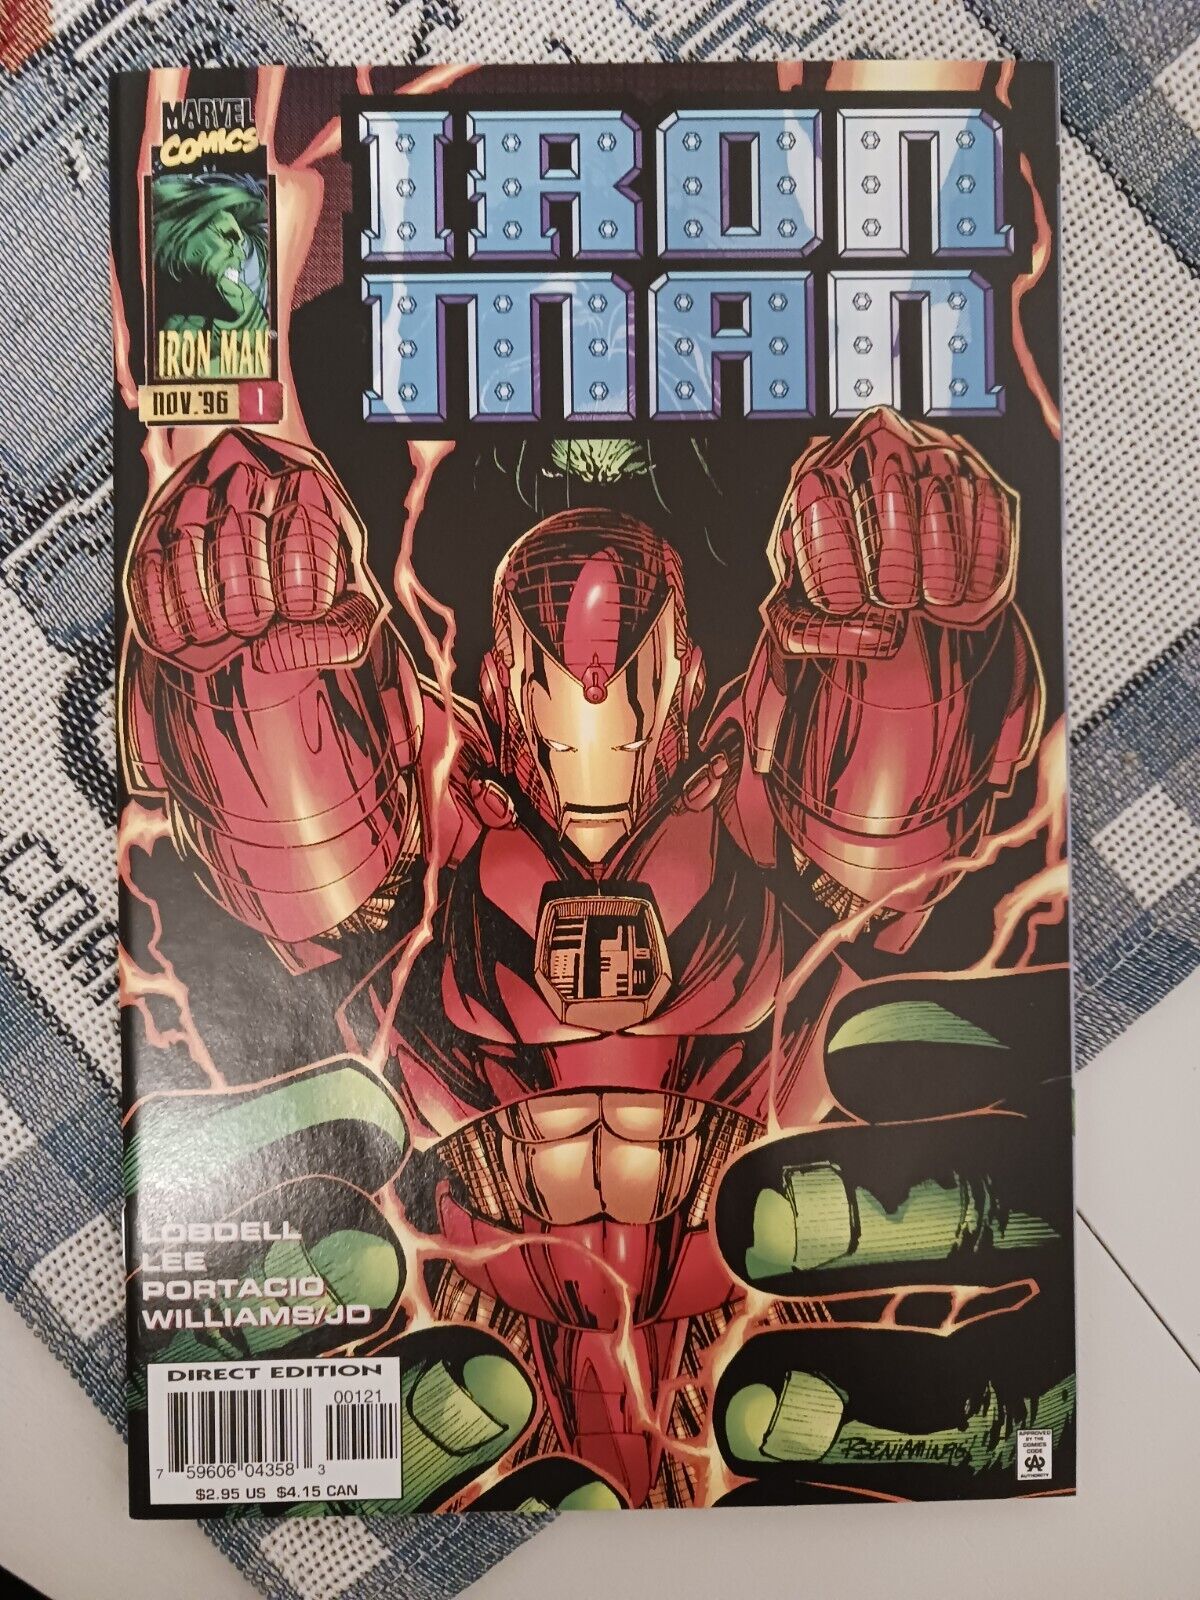 Iron Man #1 (Marvel, November 1996) ALTERNATE Cover Near Mint/MT Heroes Reborn